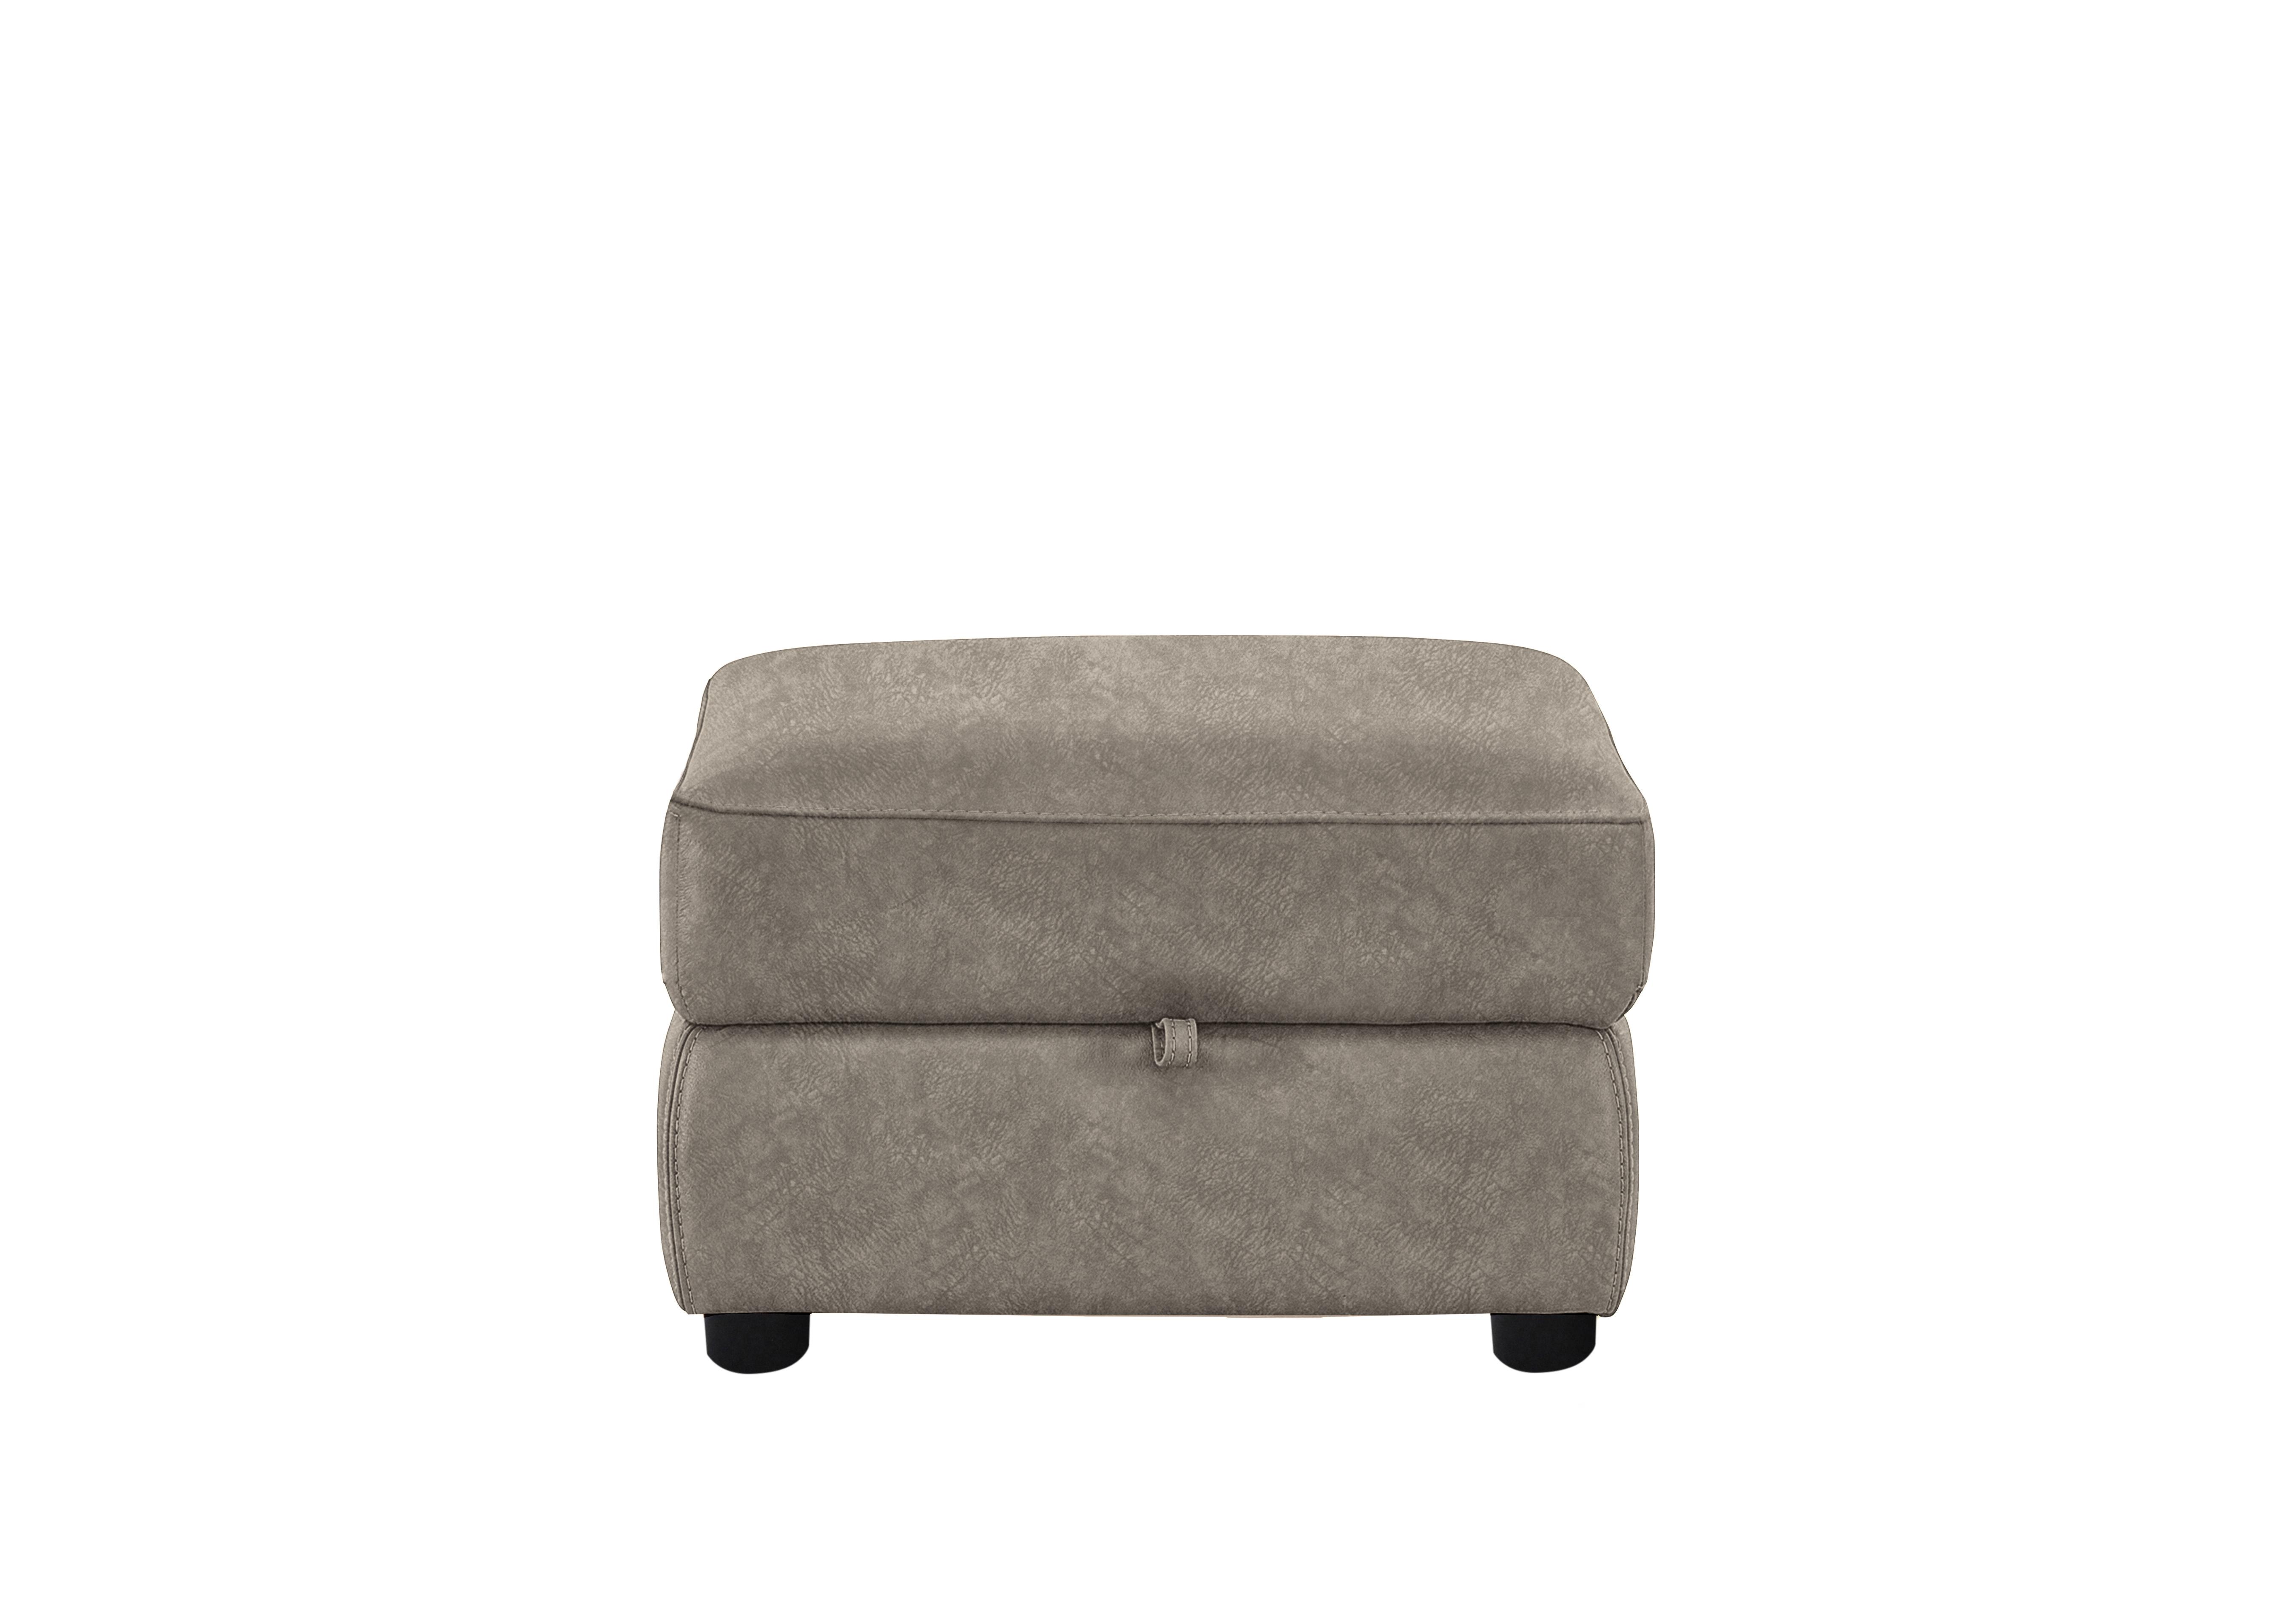 Snug Fabric Storage Footstool in Bfa-Bnn-R29 Fv1 Mink on Furniture Village